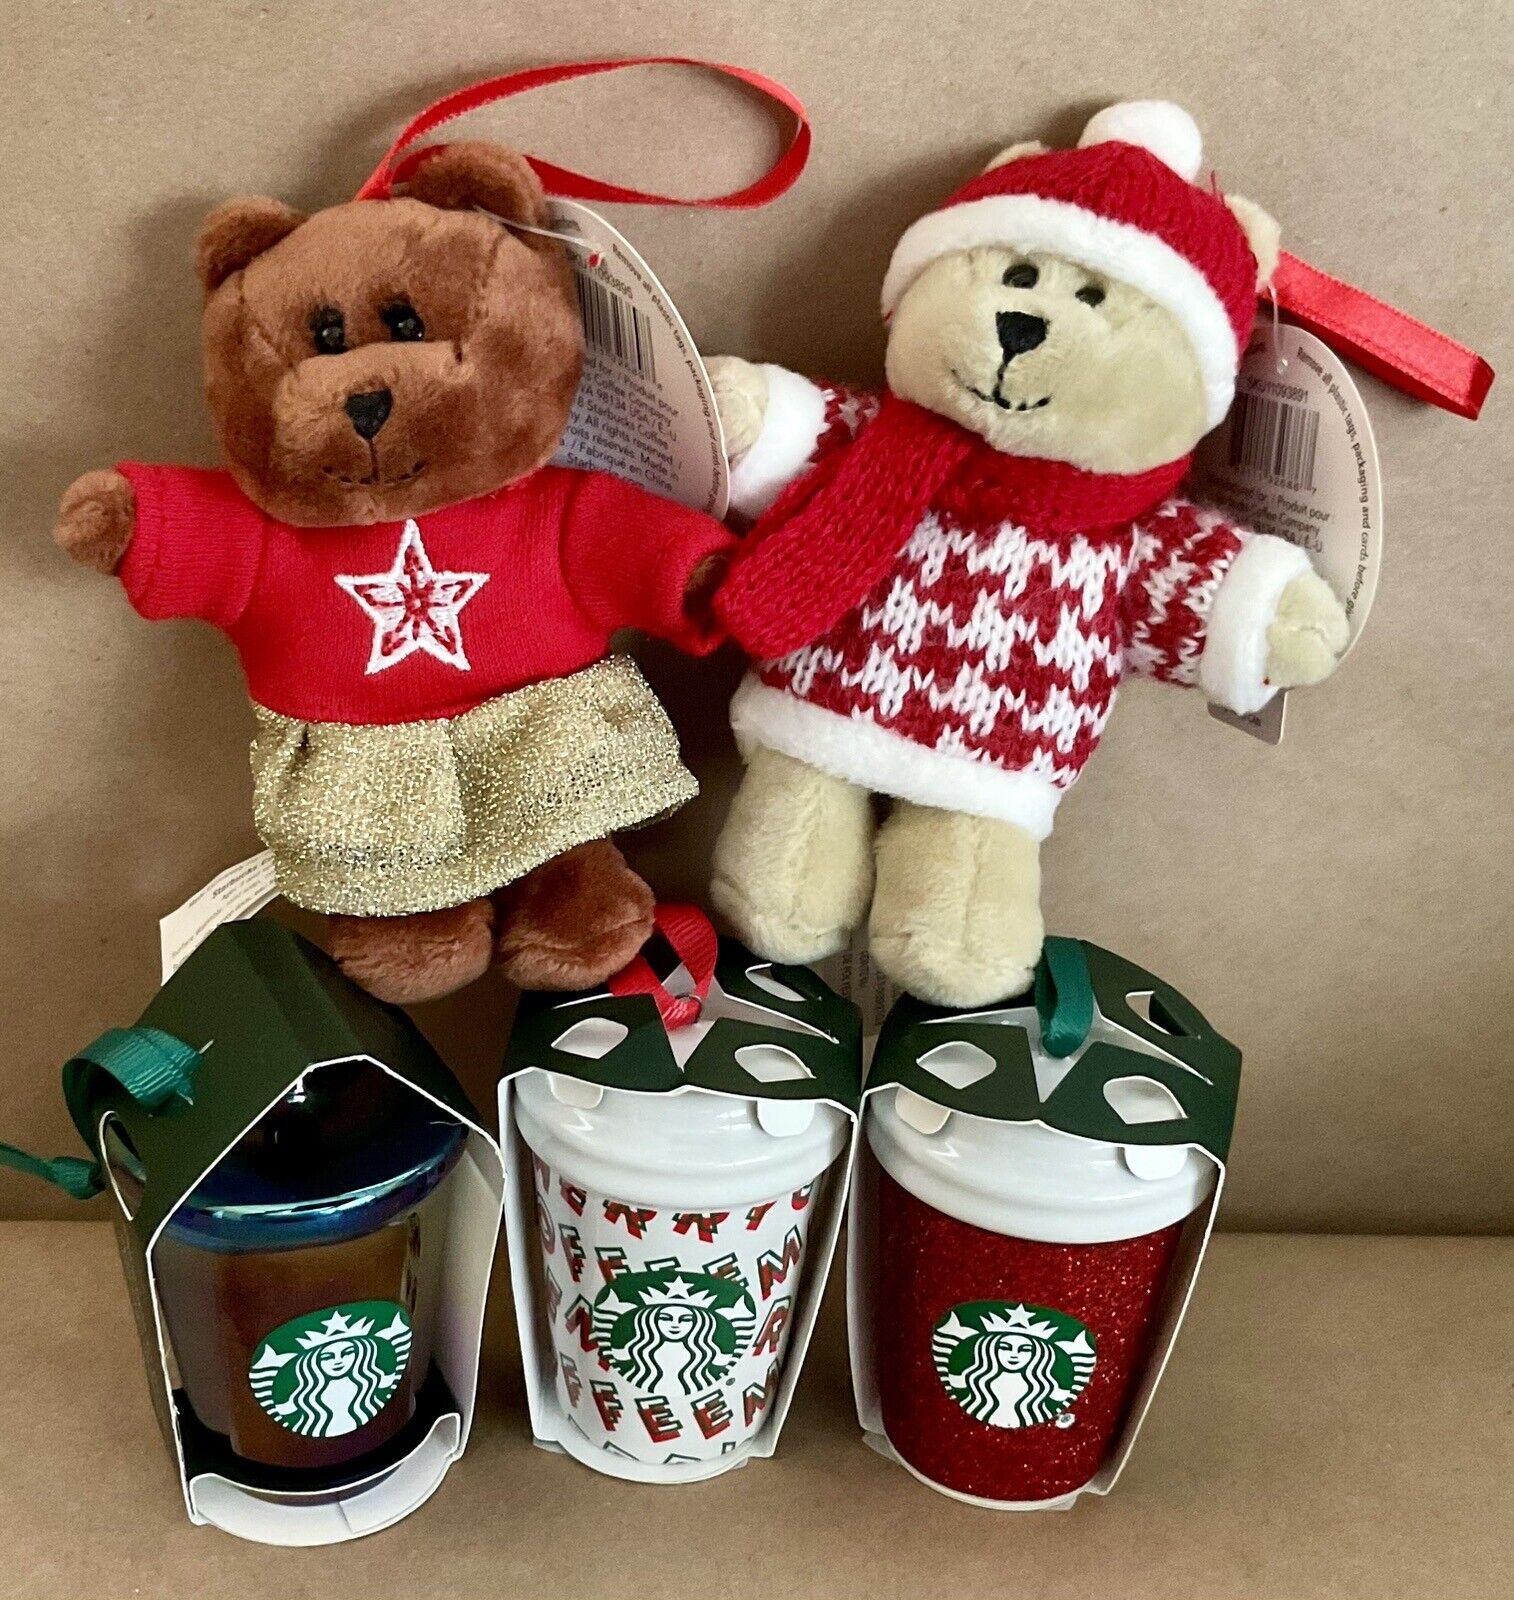 Lot of 5 Starbucks Christmas Ornaments 2018 Ceramic Cups & Bears BRAND NEW Mint